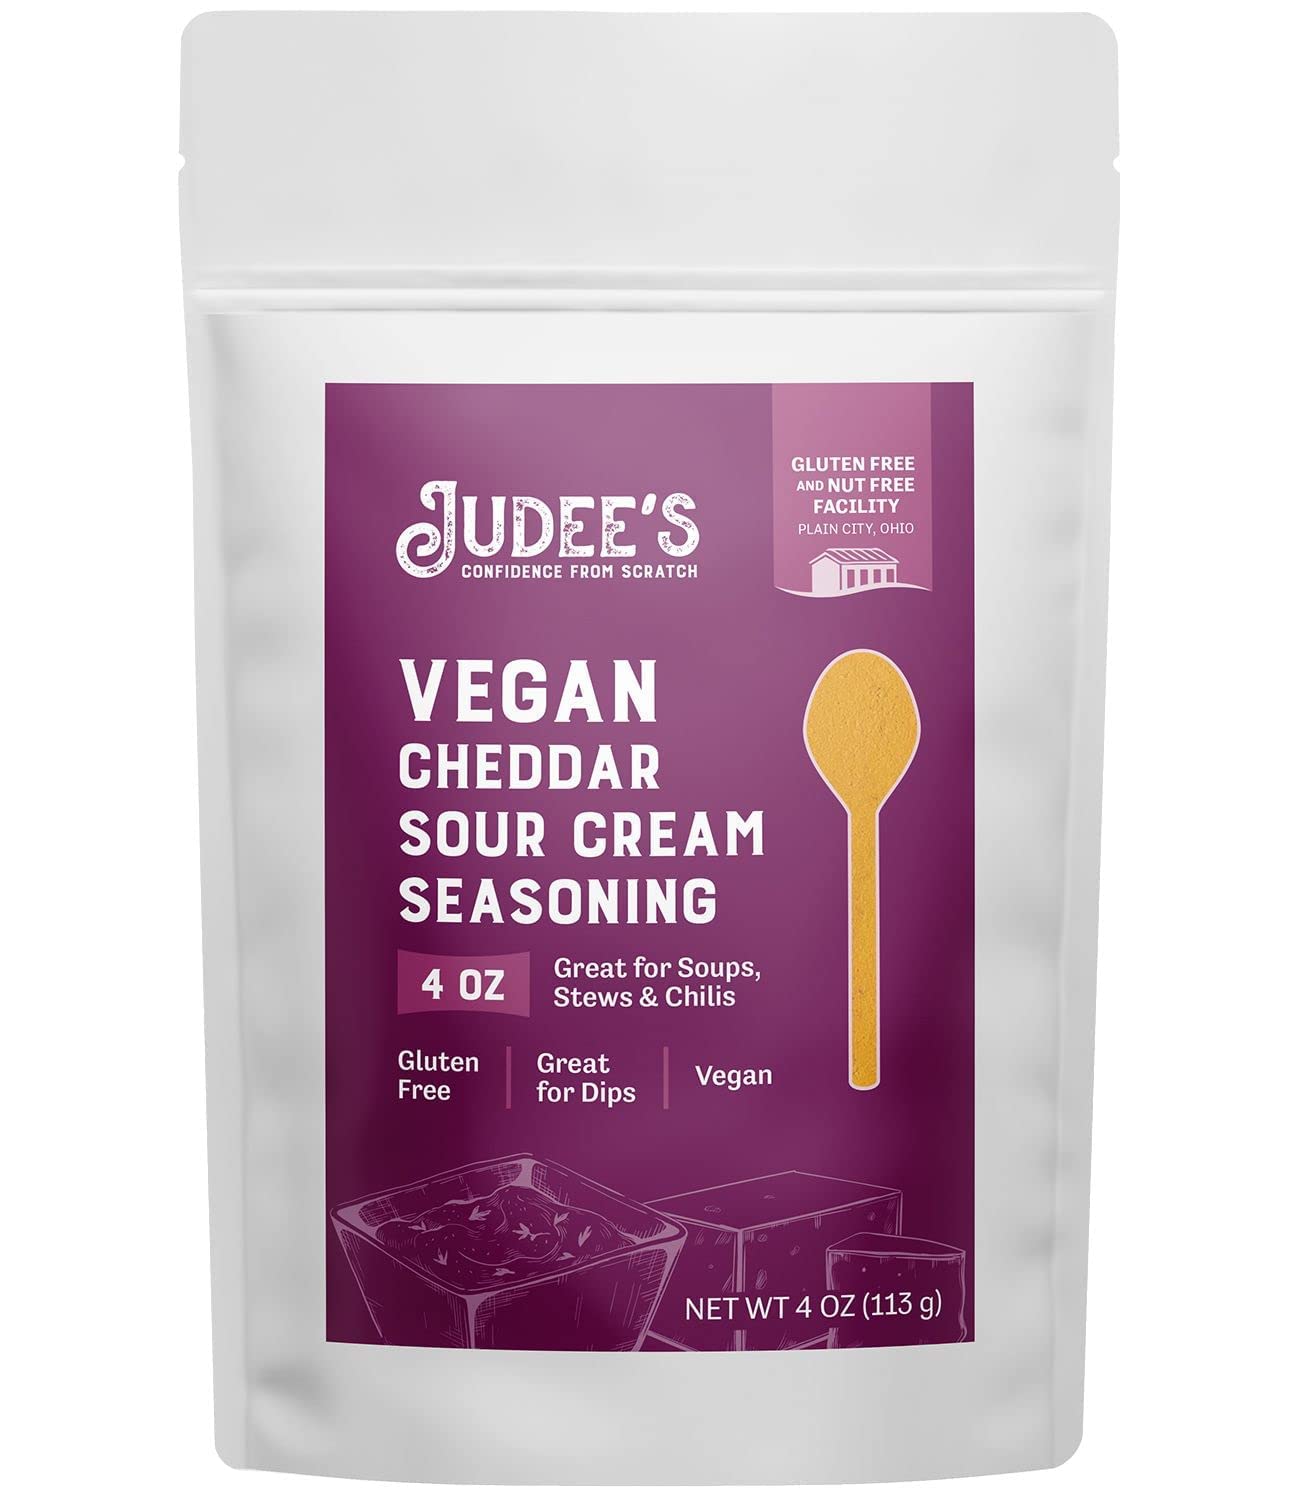 Judee's Vegan Cheddar and Sour Cream Seasoning